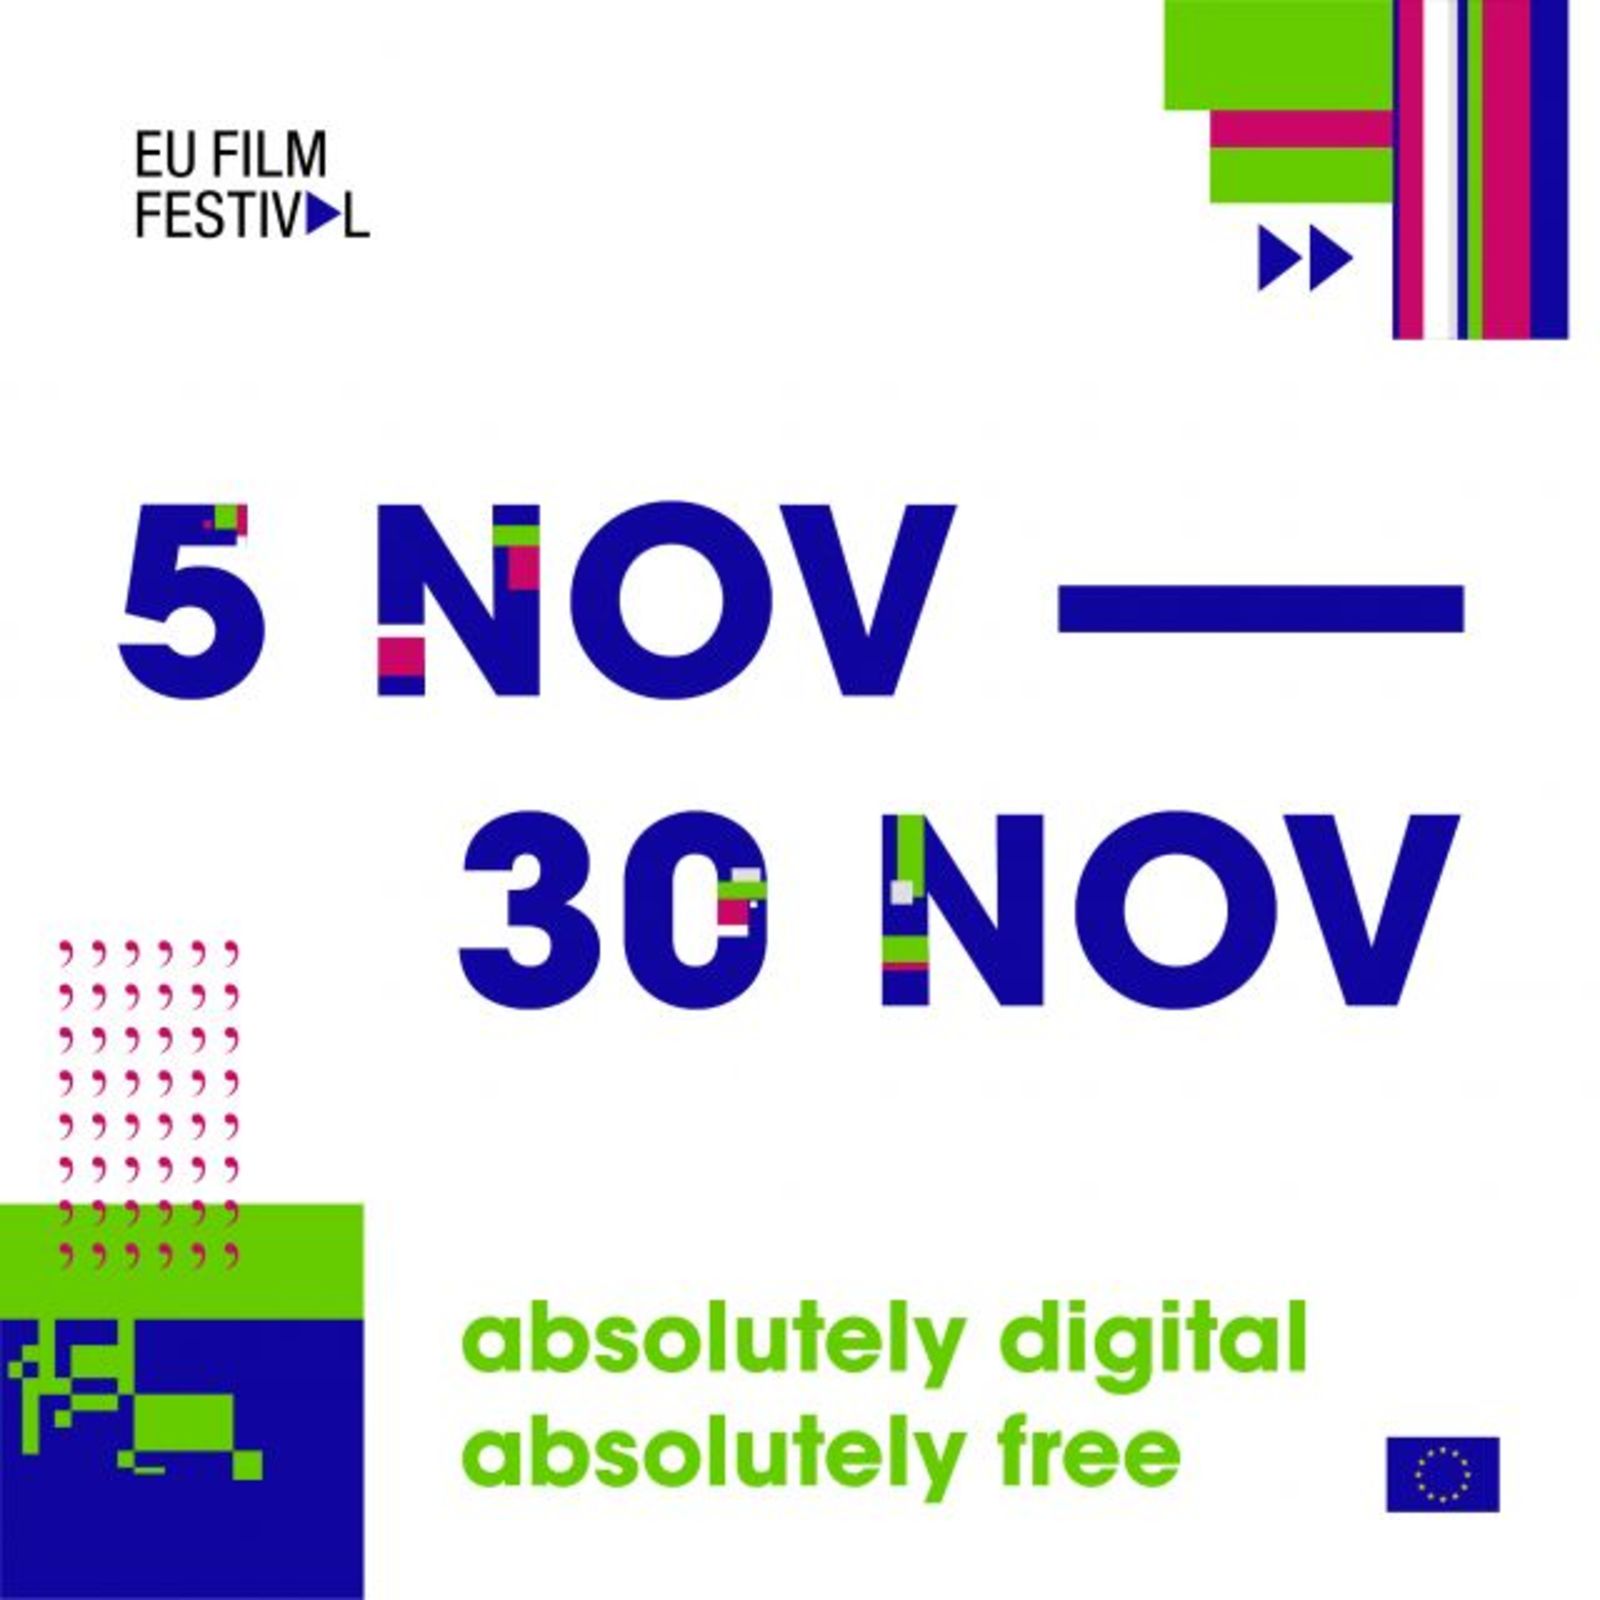 Bulgarian film at the 25th European Film Festival in India